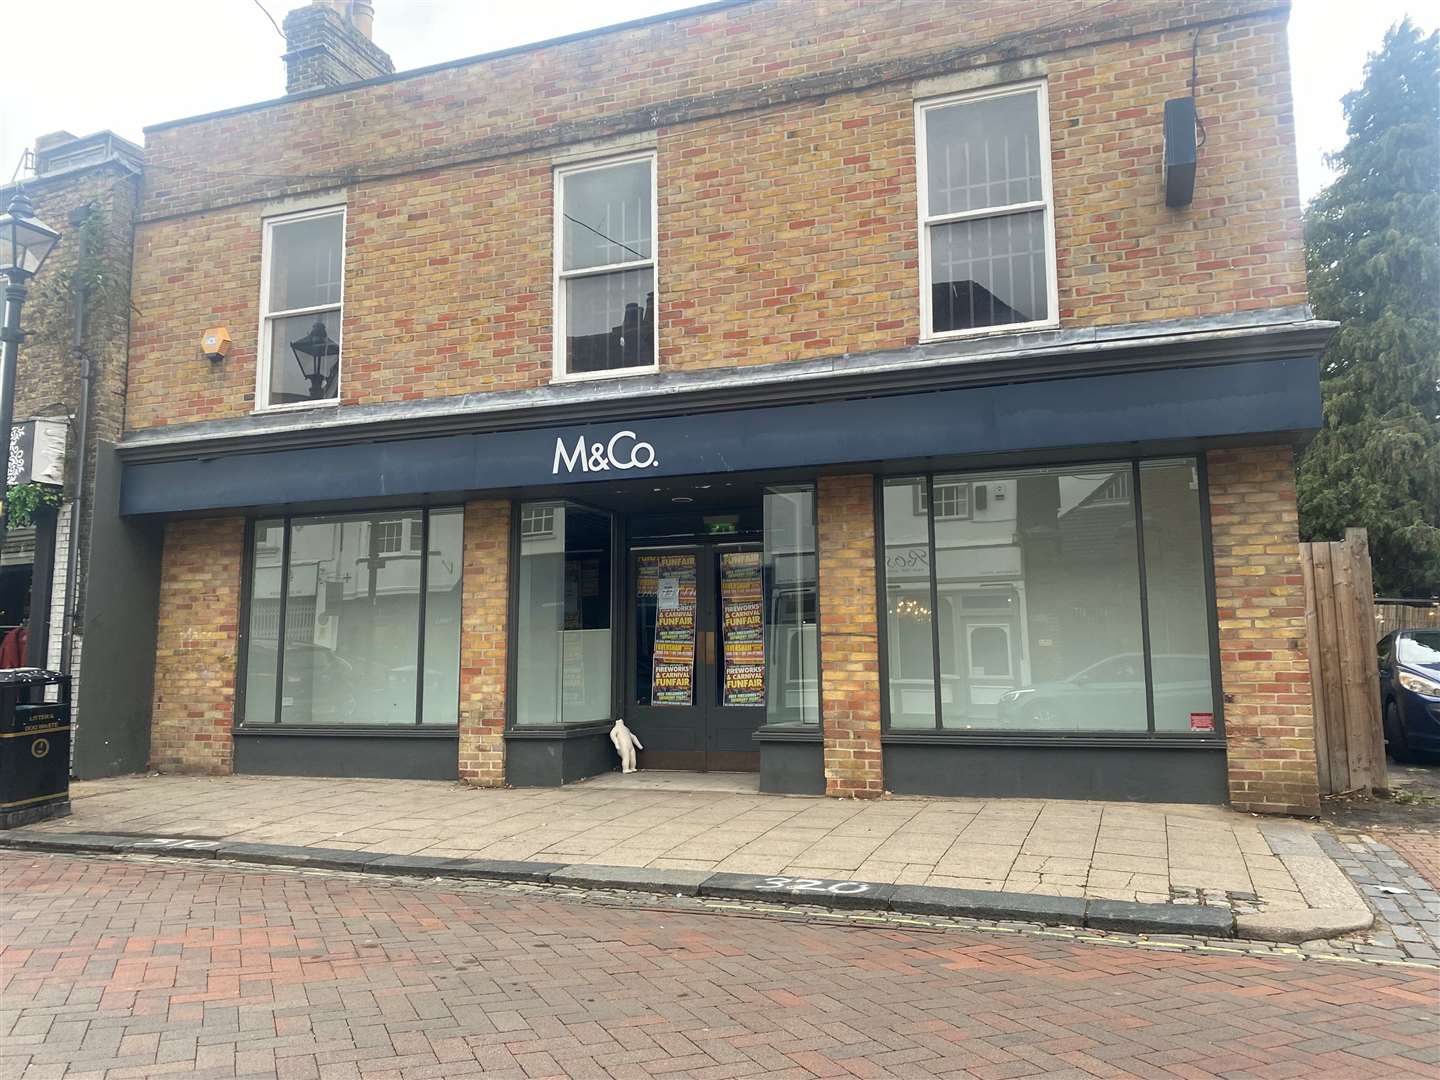 70-72 Preston Street in Faversham used to be M&Co